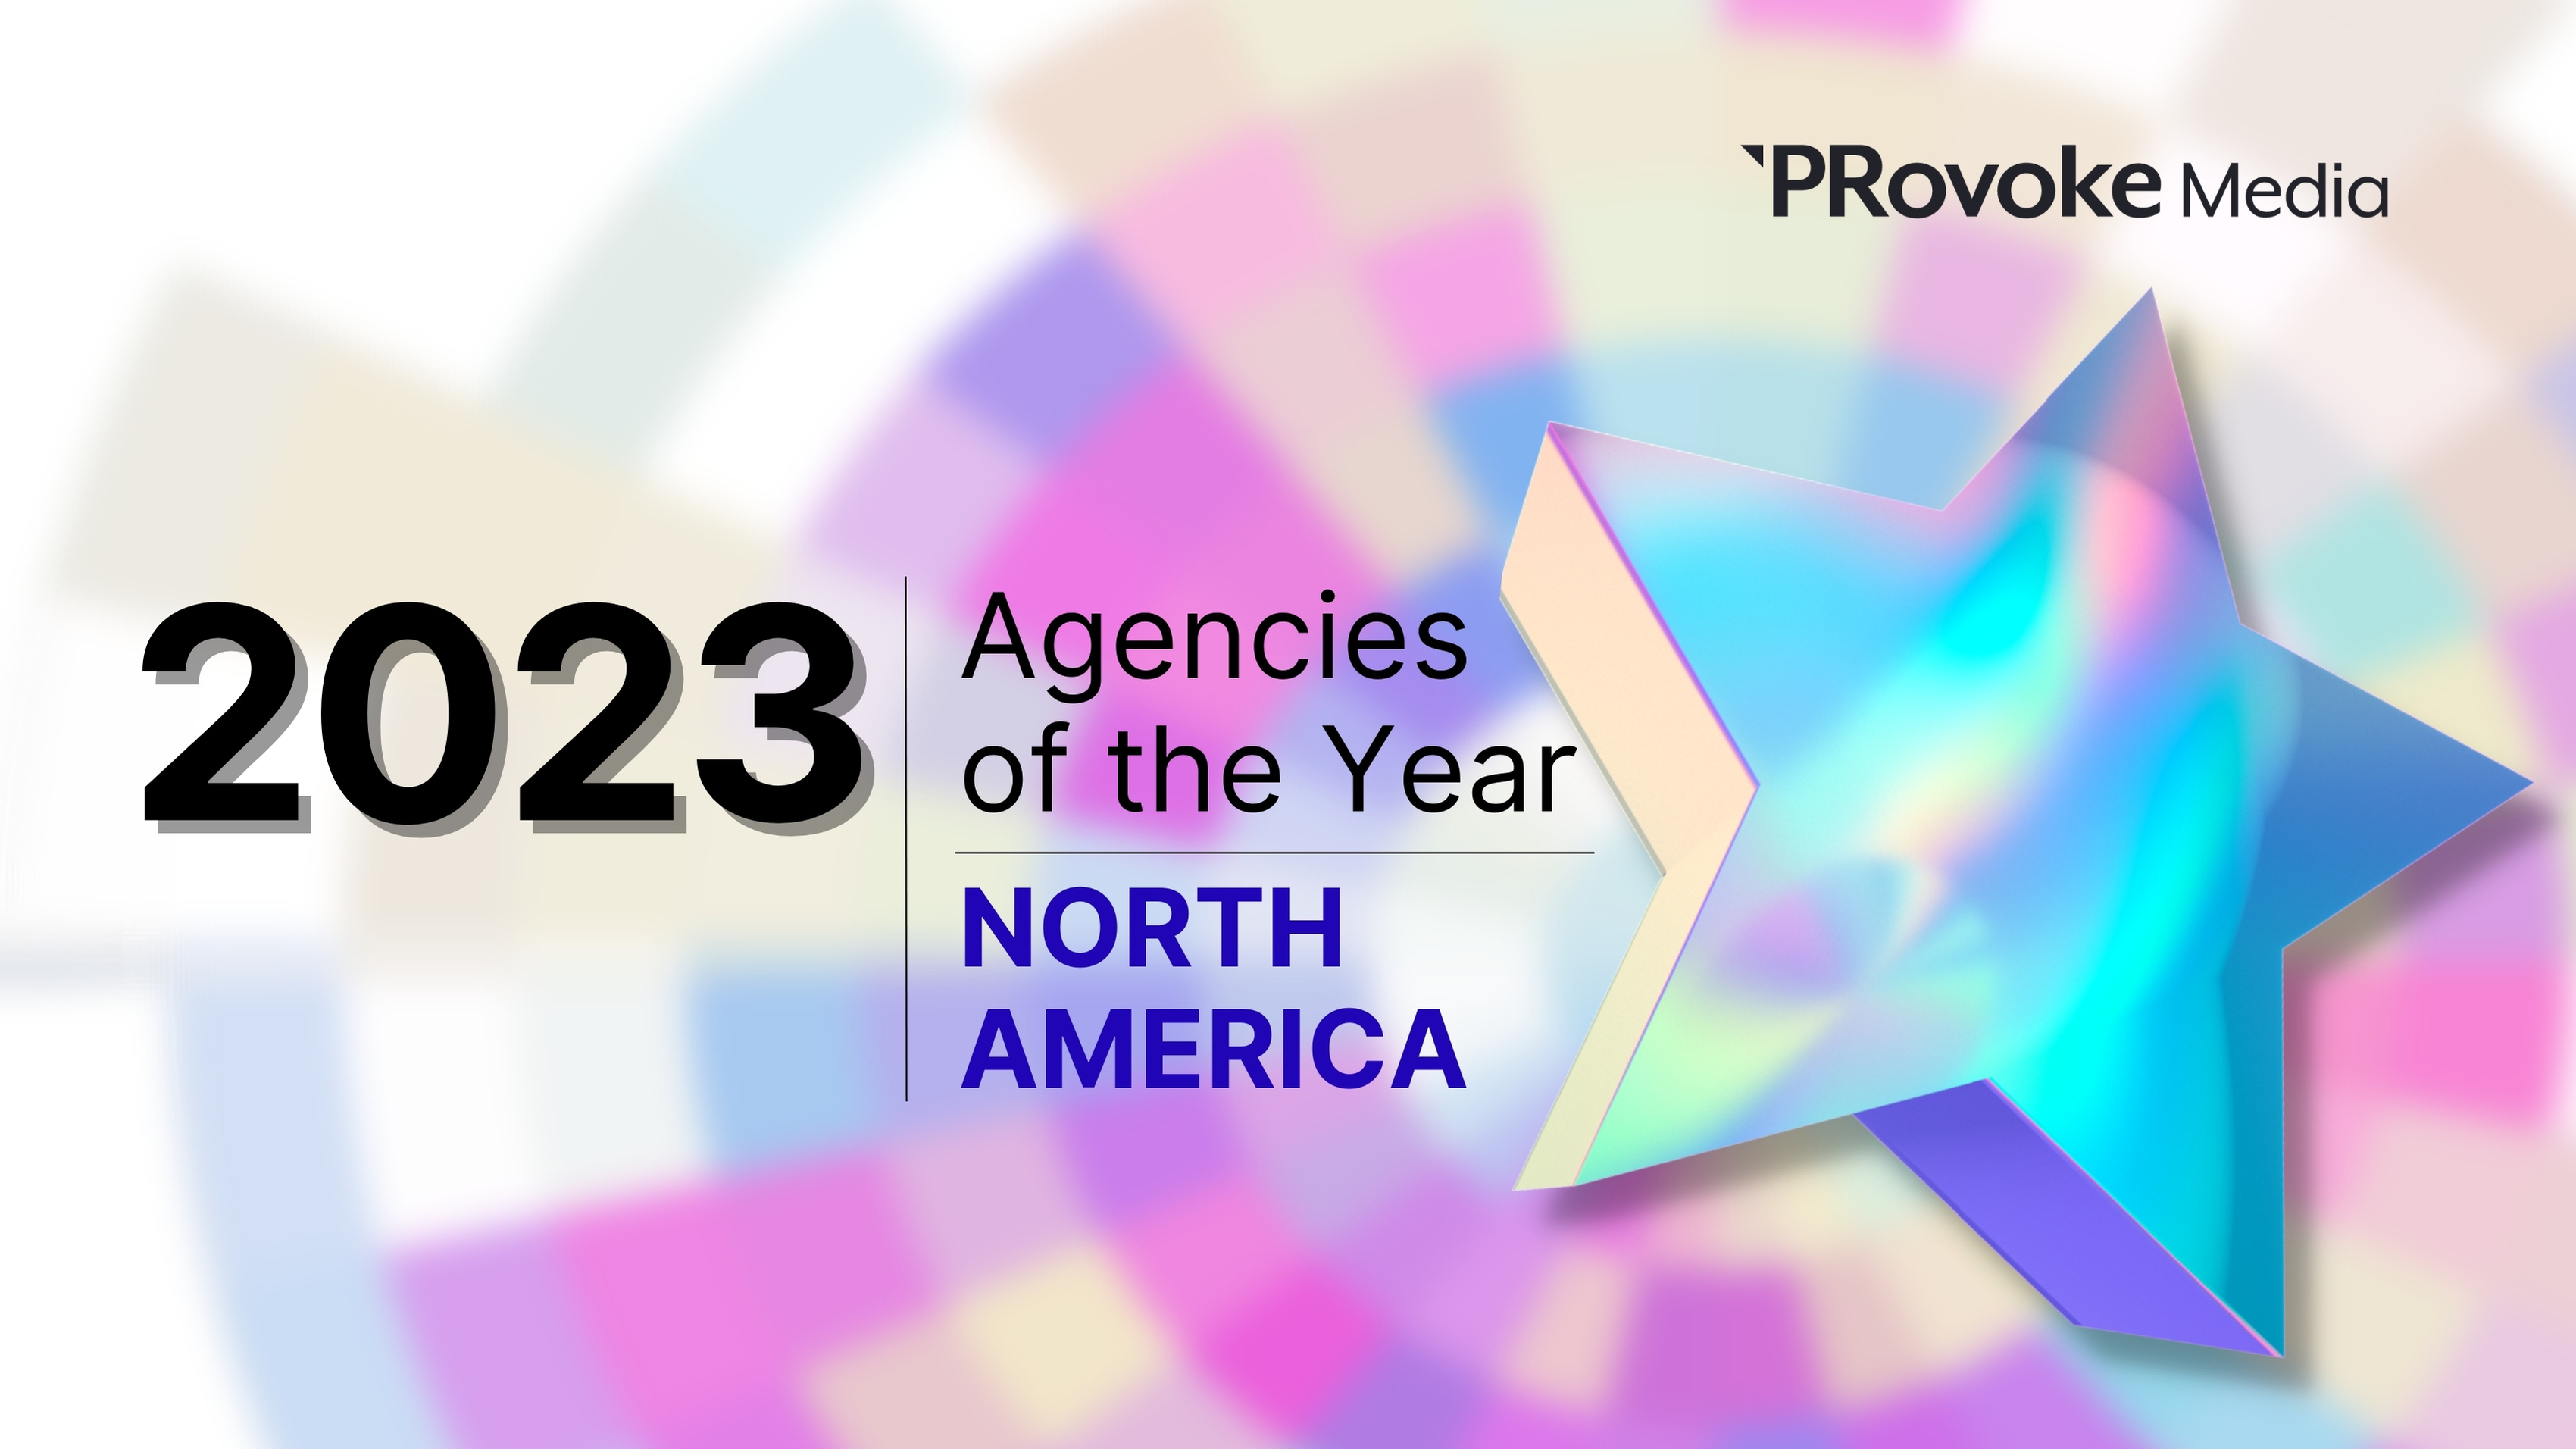 https://www.provokemedia.com/images/default-source/events-awards/2023/provoke-media-2023-global-rankings-banner-twitter-(2).jpg